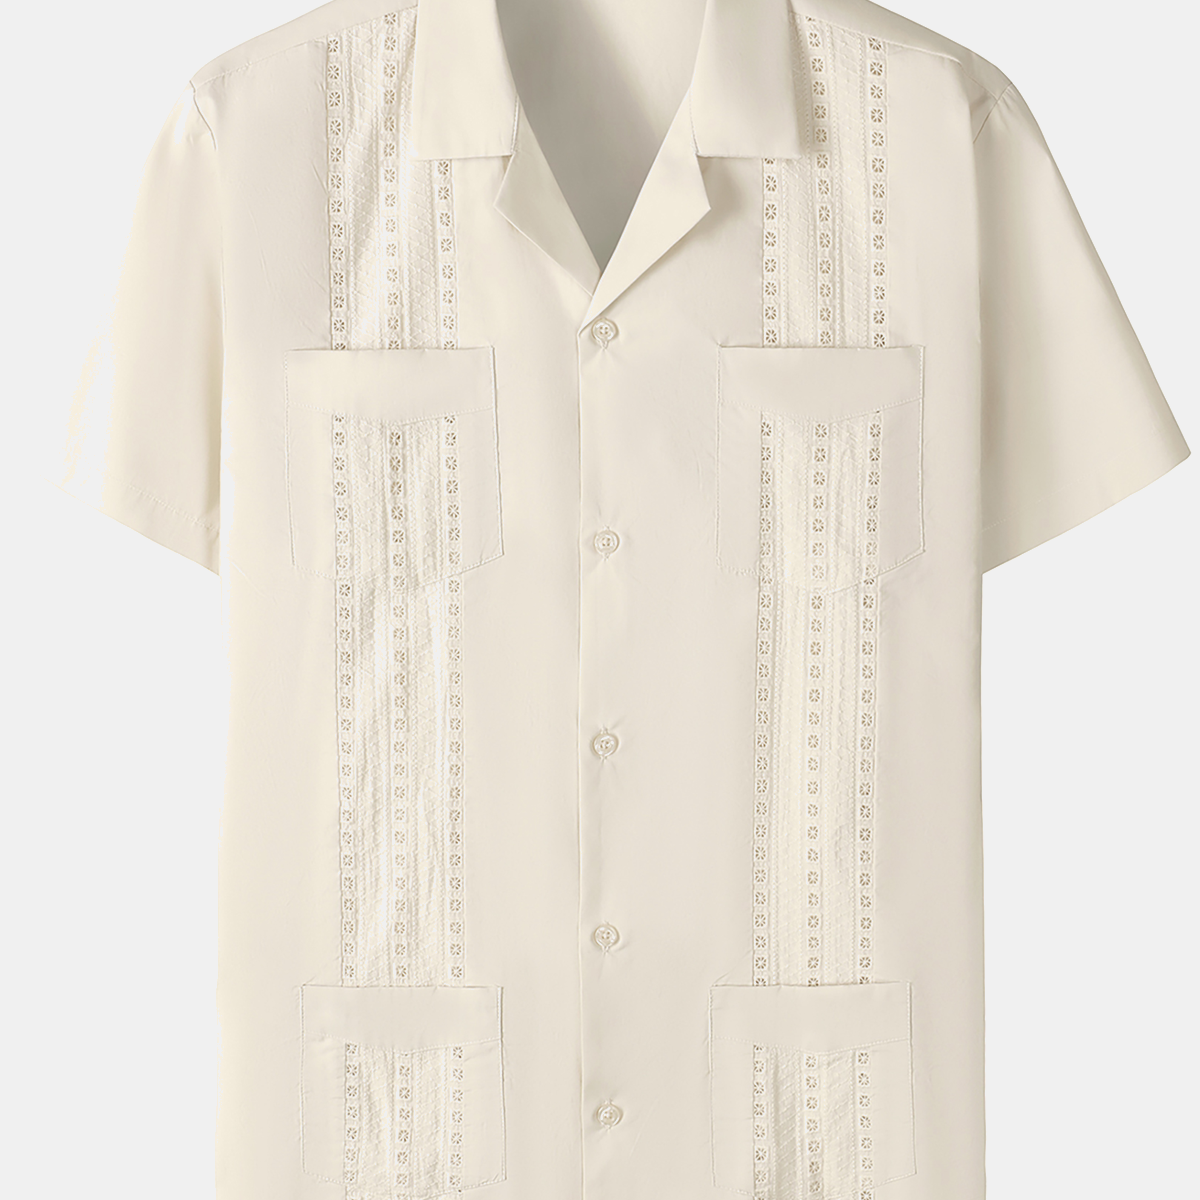 Men's Guayabera Cuban Short Sleeve Casual Button Beach Shirt